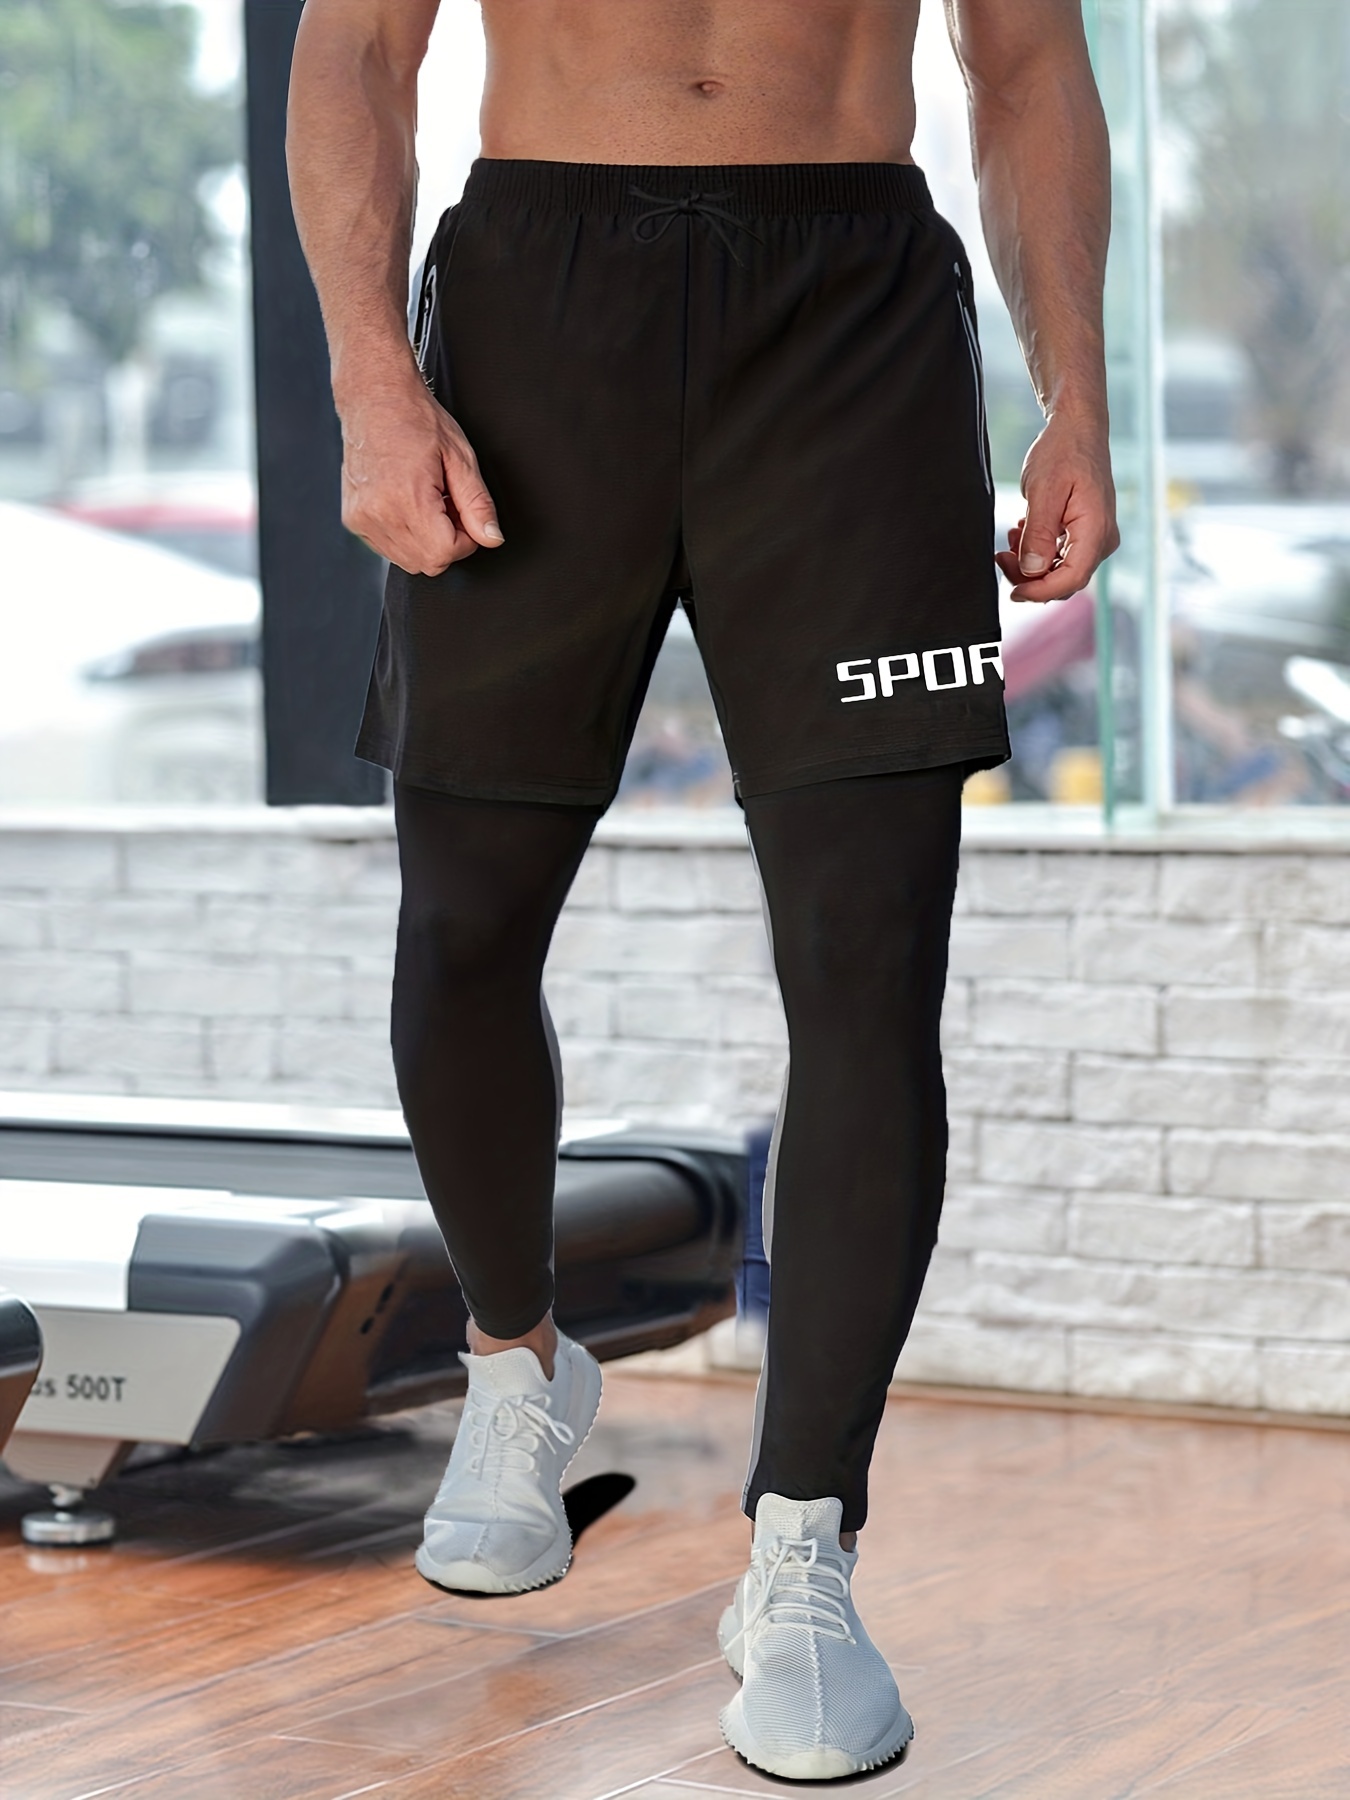 Men's Leggings, Shorts & Sweatpants for Basketball